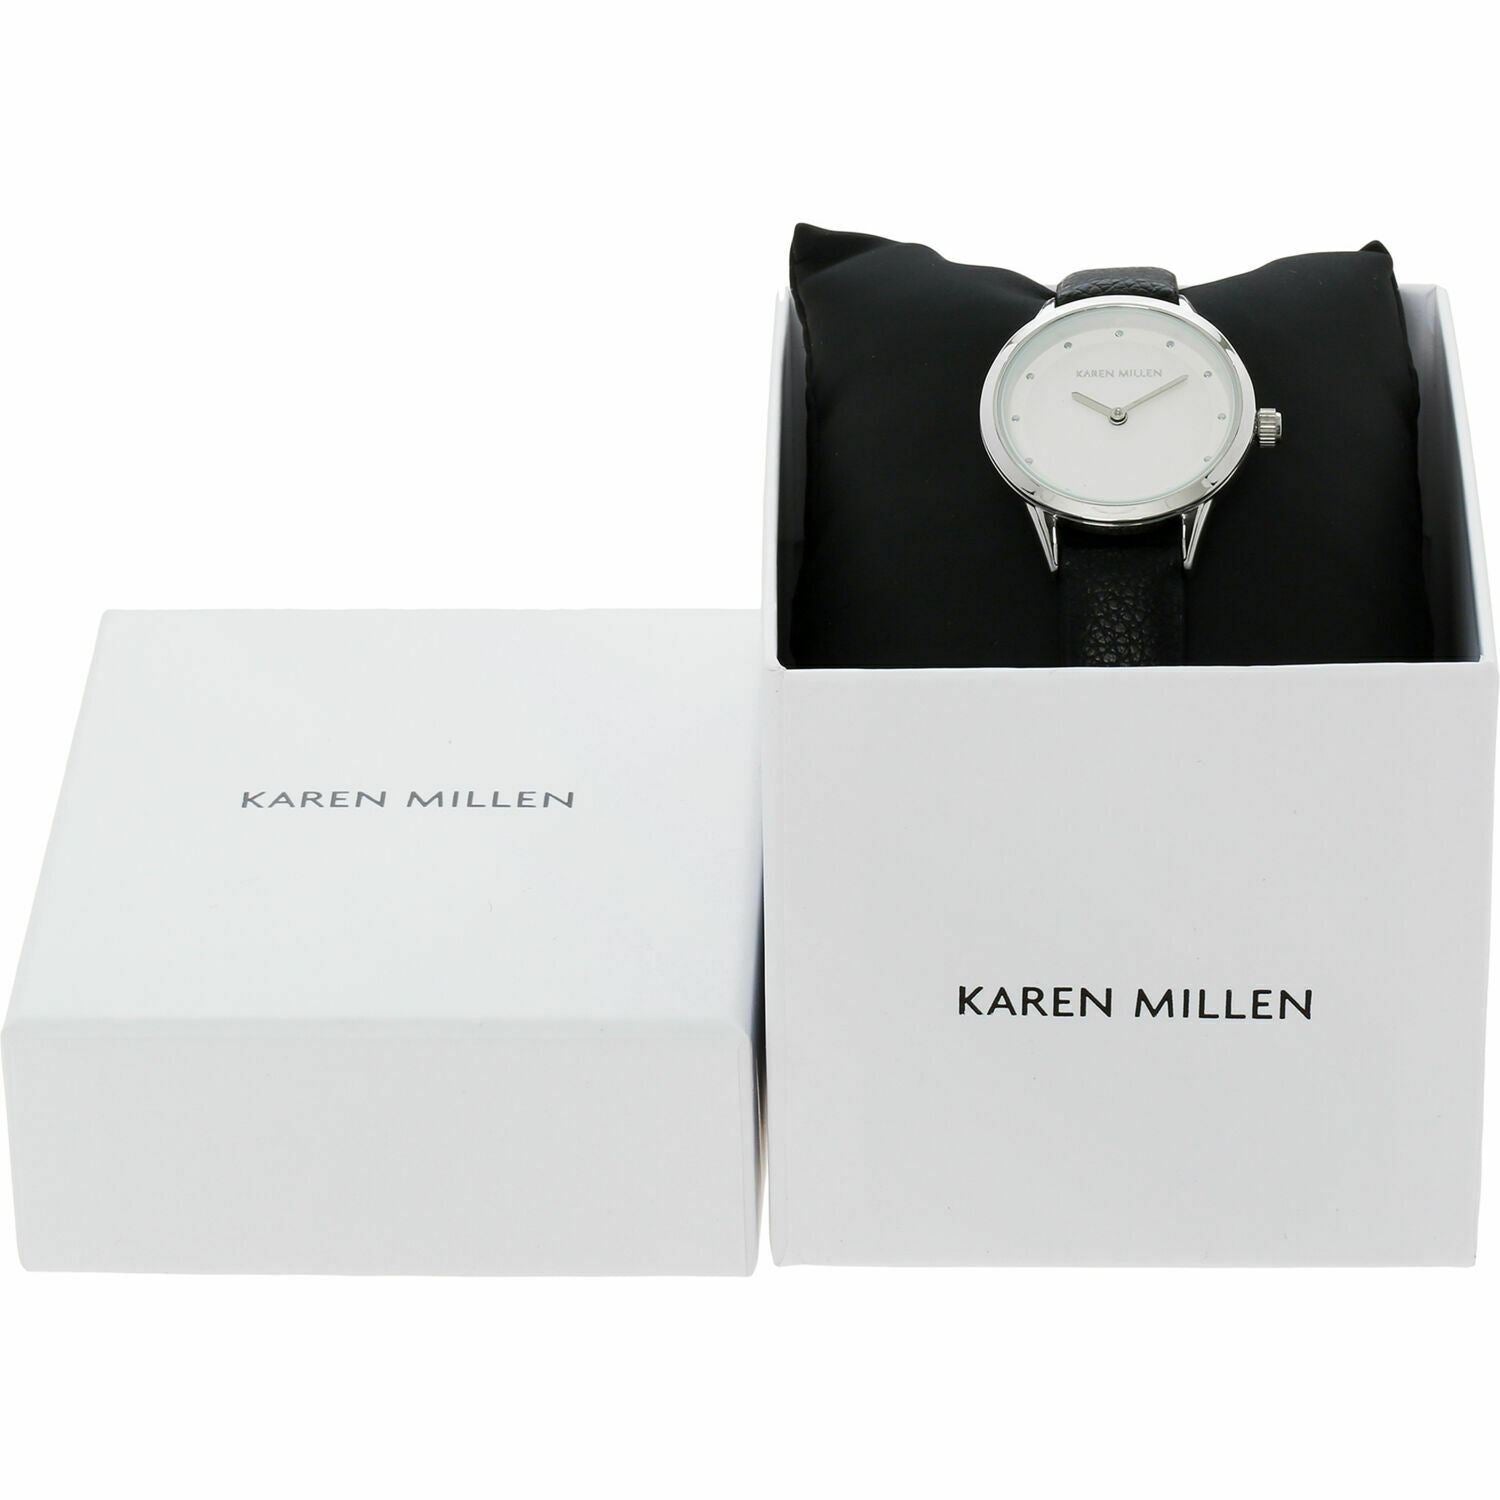 KAREN MILLEN Women's Watch, Black Strap, Boxed SKM005B